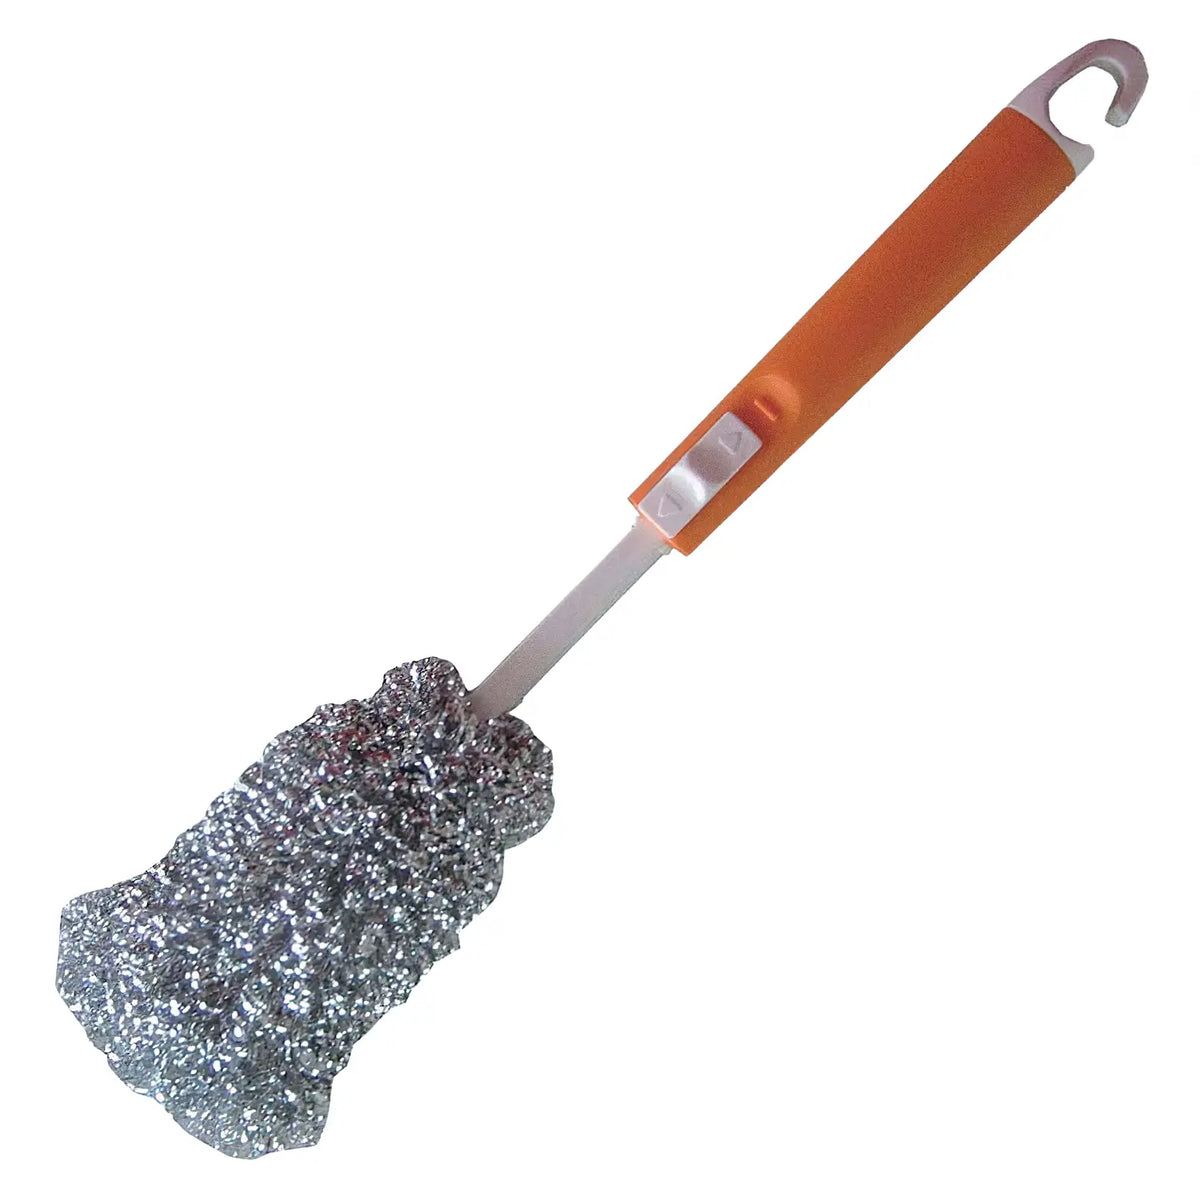 COWGEL High-Purity Aluminum Cleaning Sponge